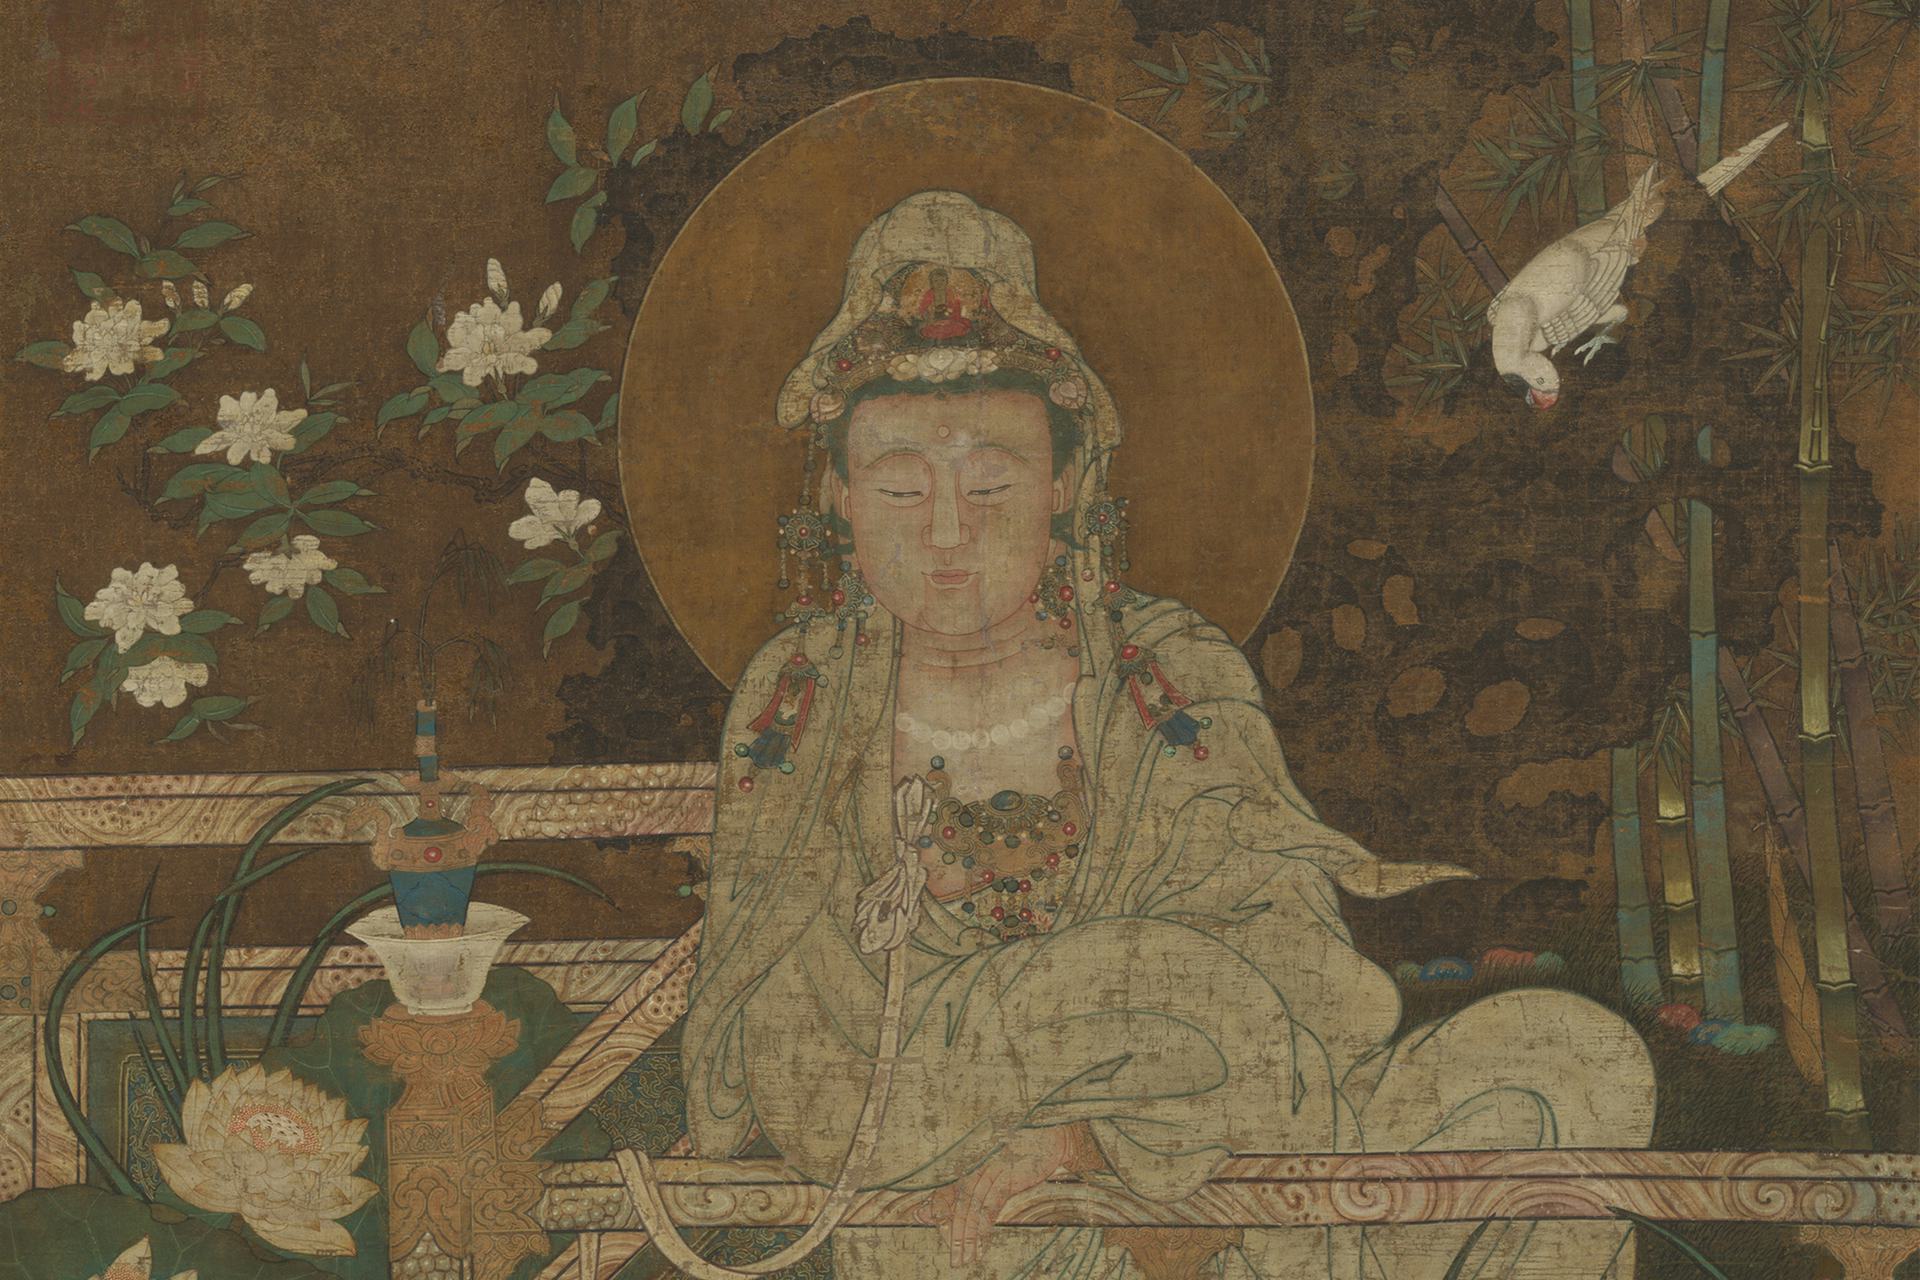 Guanyin, Chinese Goddess of Mercy (3:2)